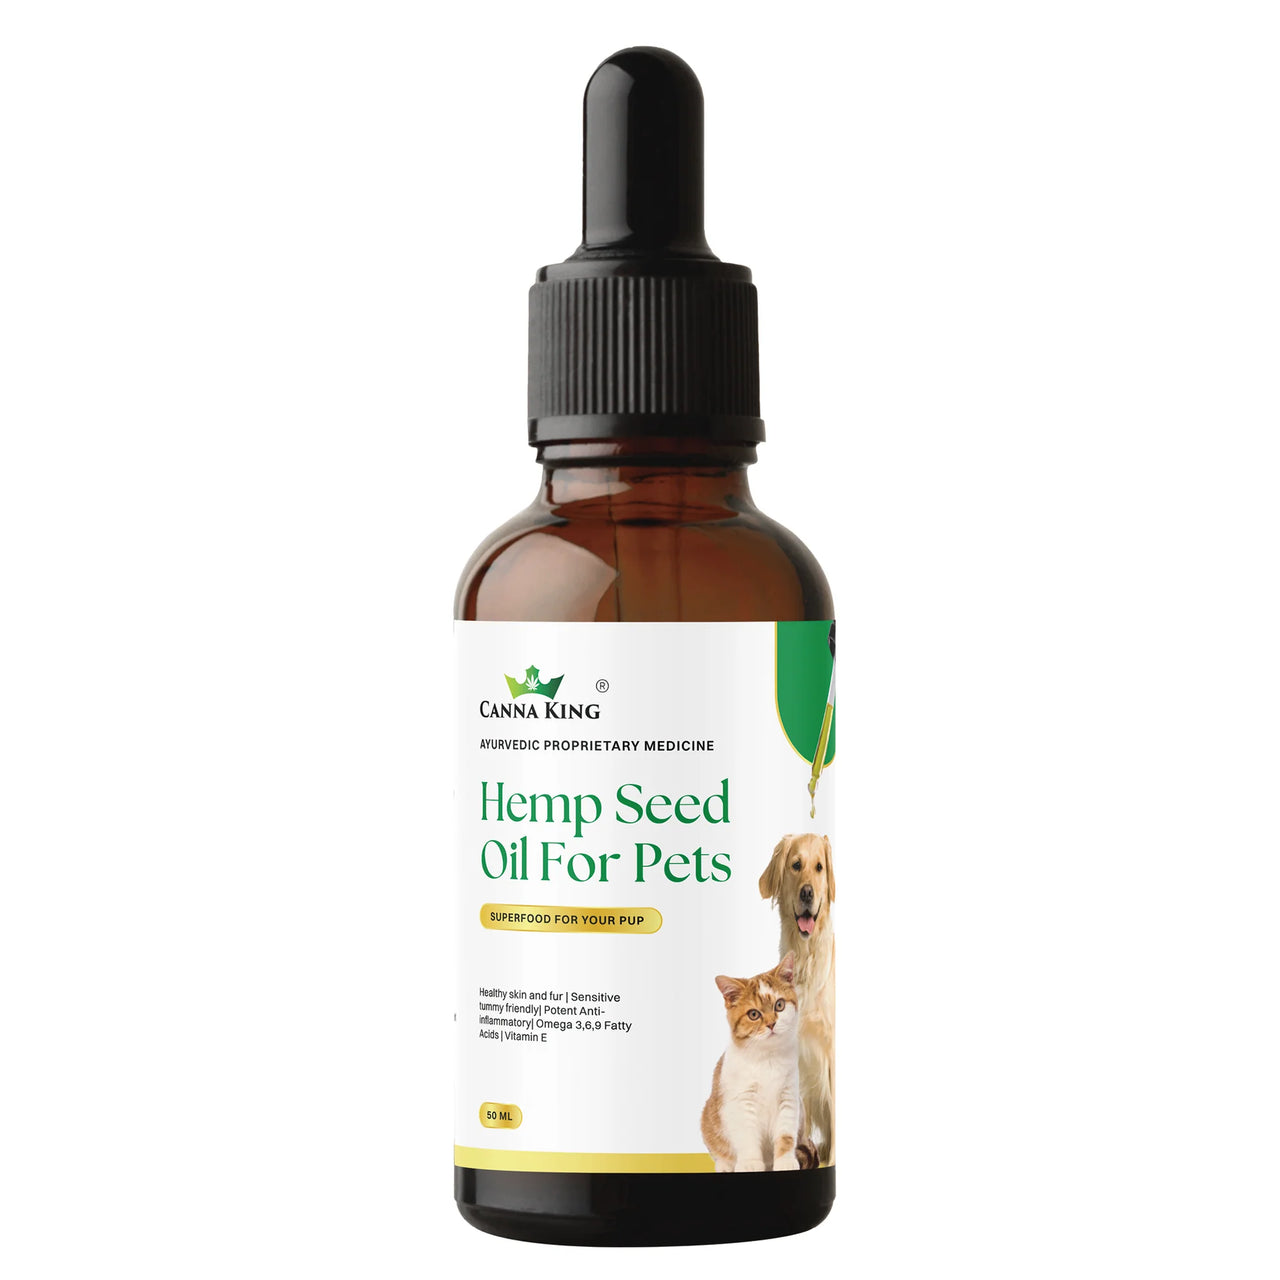 Cannaking- Hemp Seed Oil For Pets- 50 ml